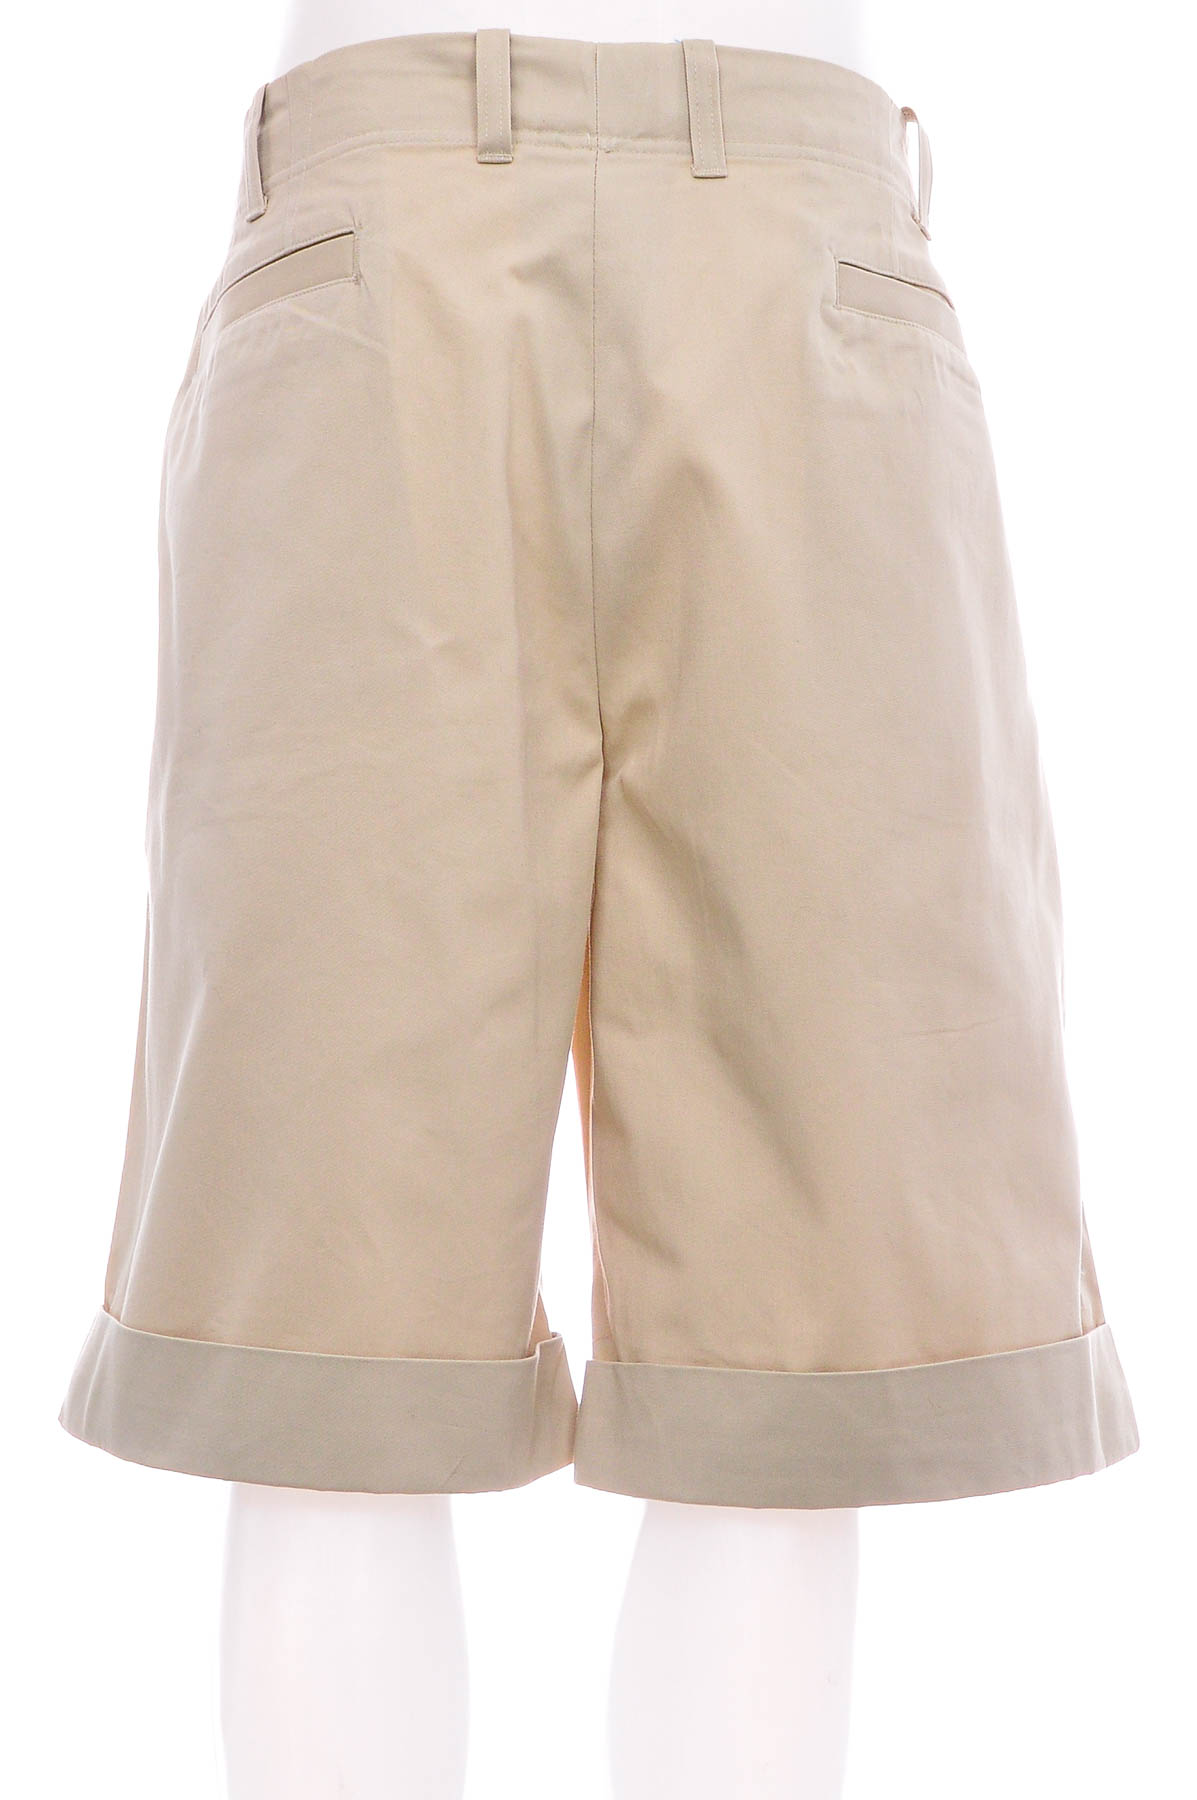 Female shorts - Faconnable - 1